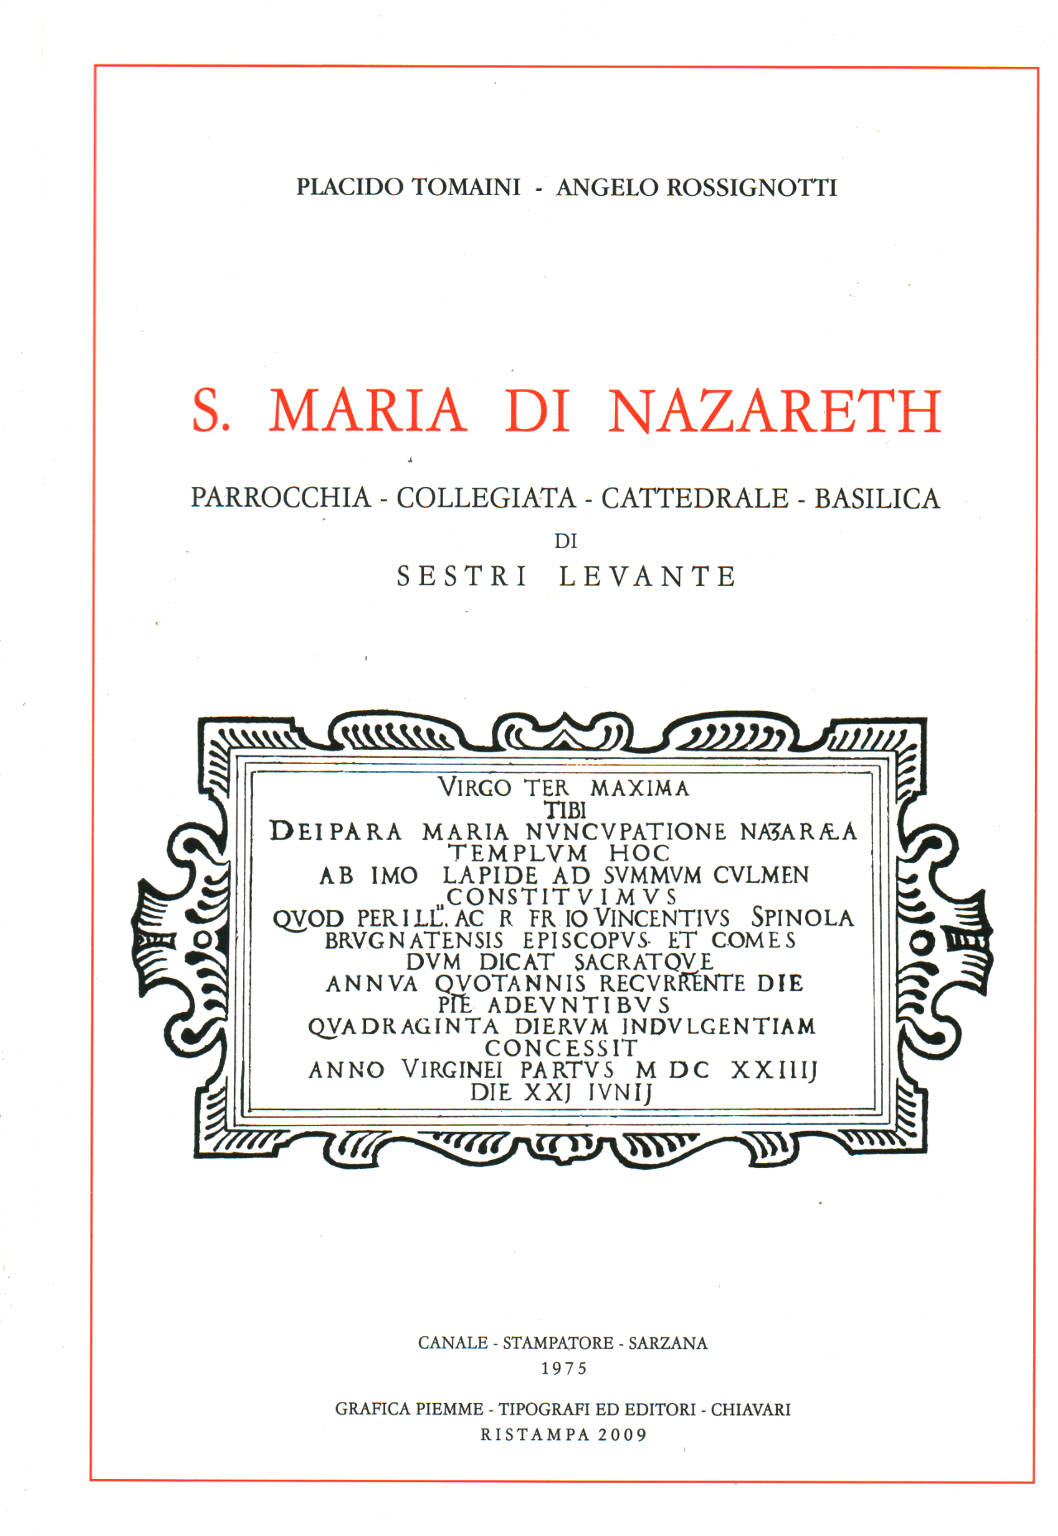 Santa María de Nazaret, Plácido Tomaini Angelo Rossignotti